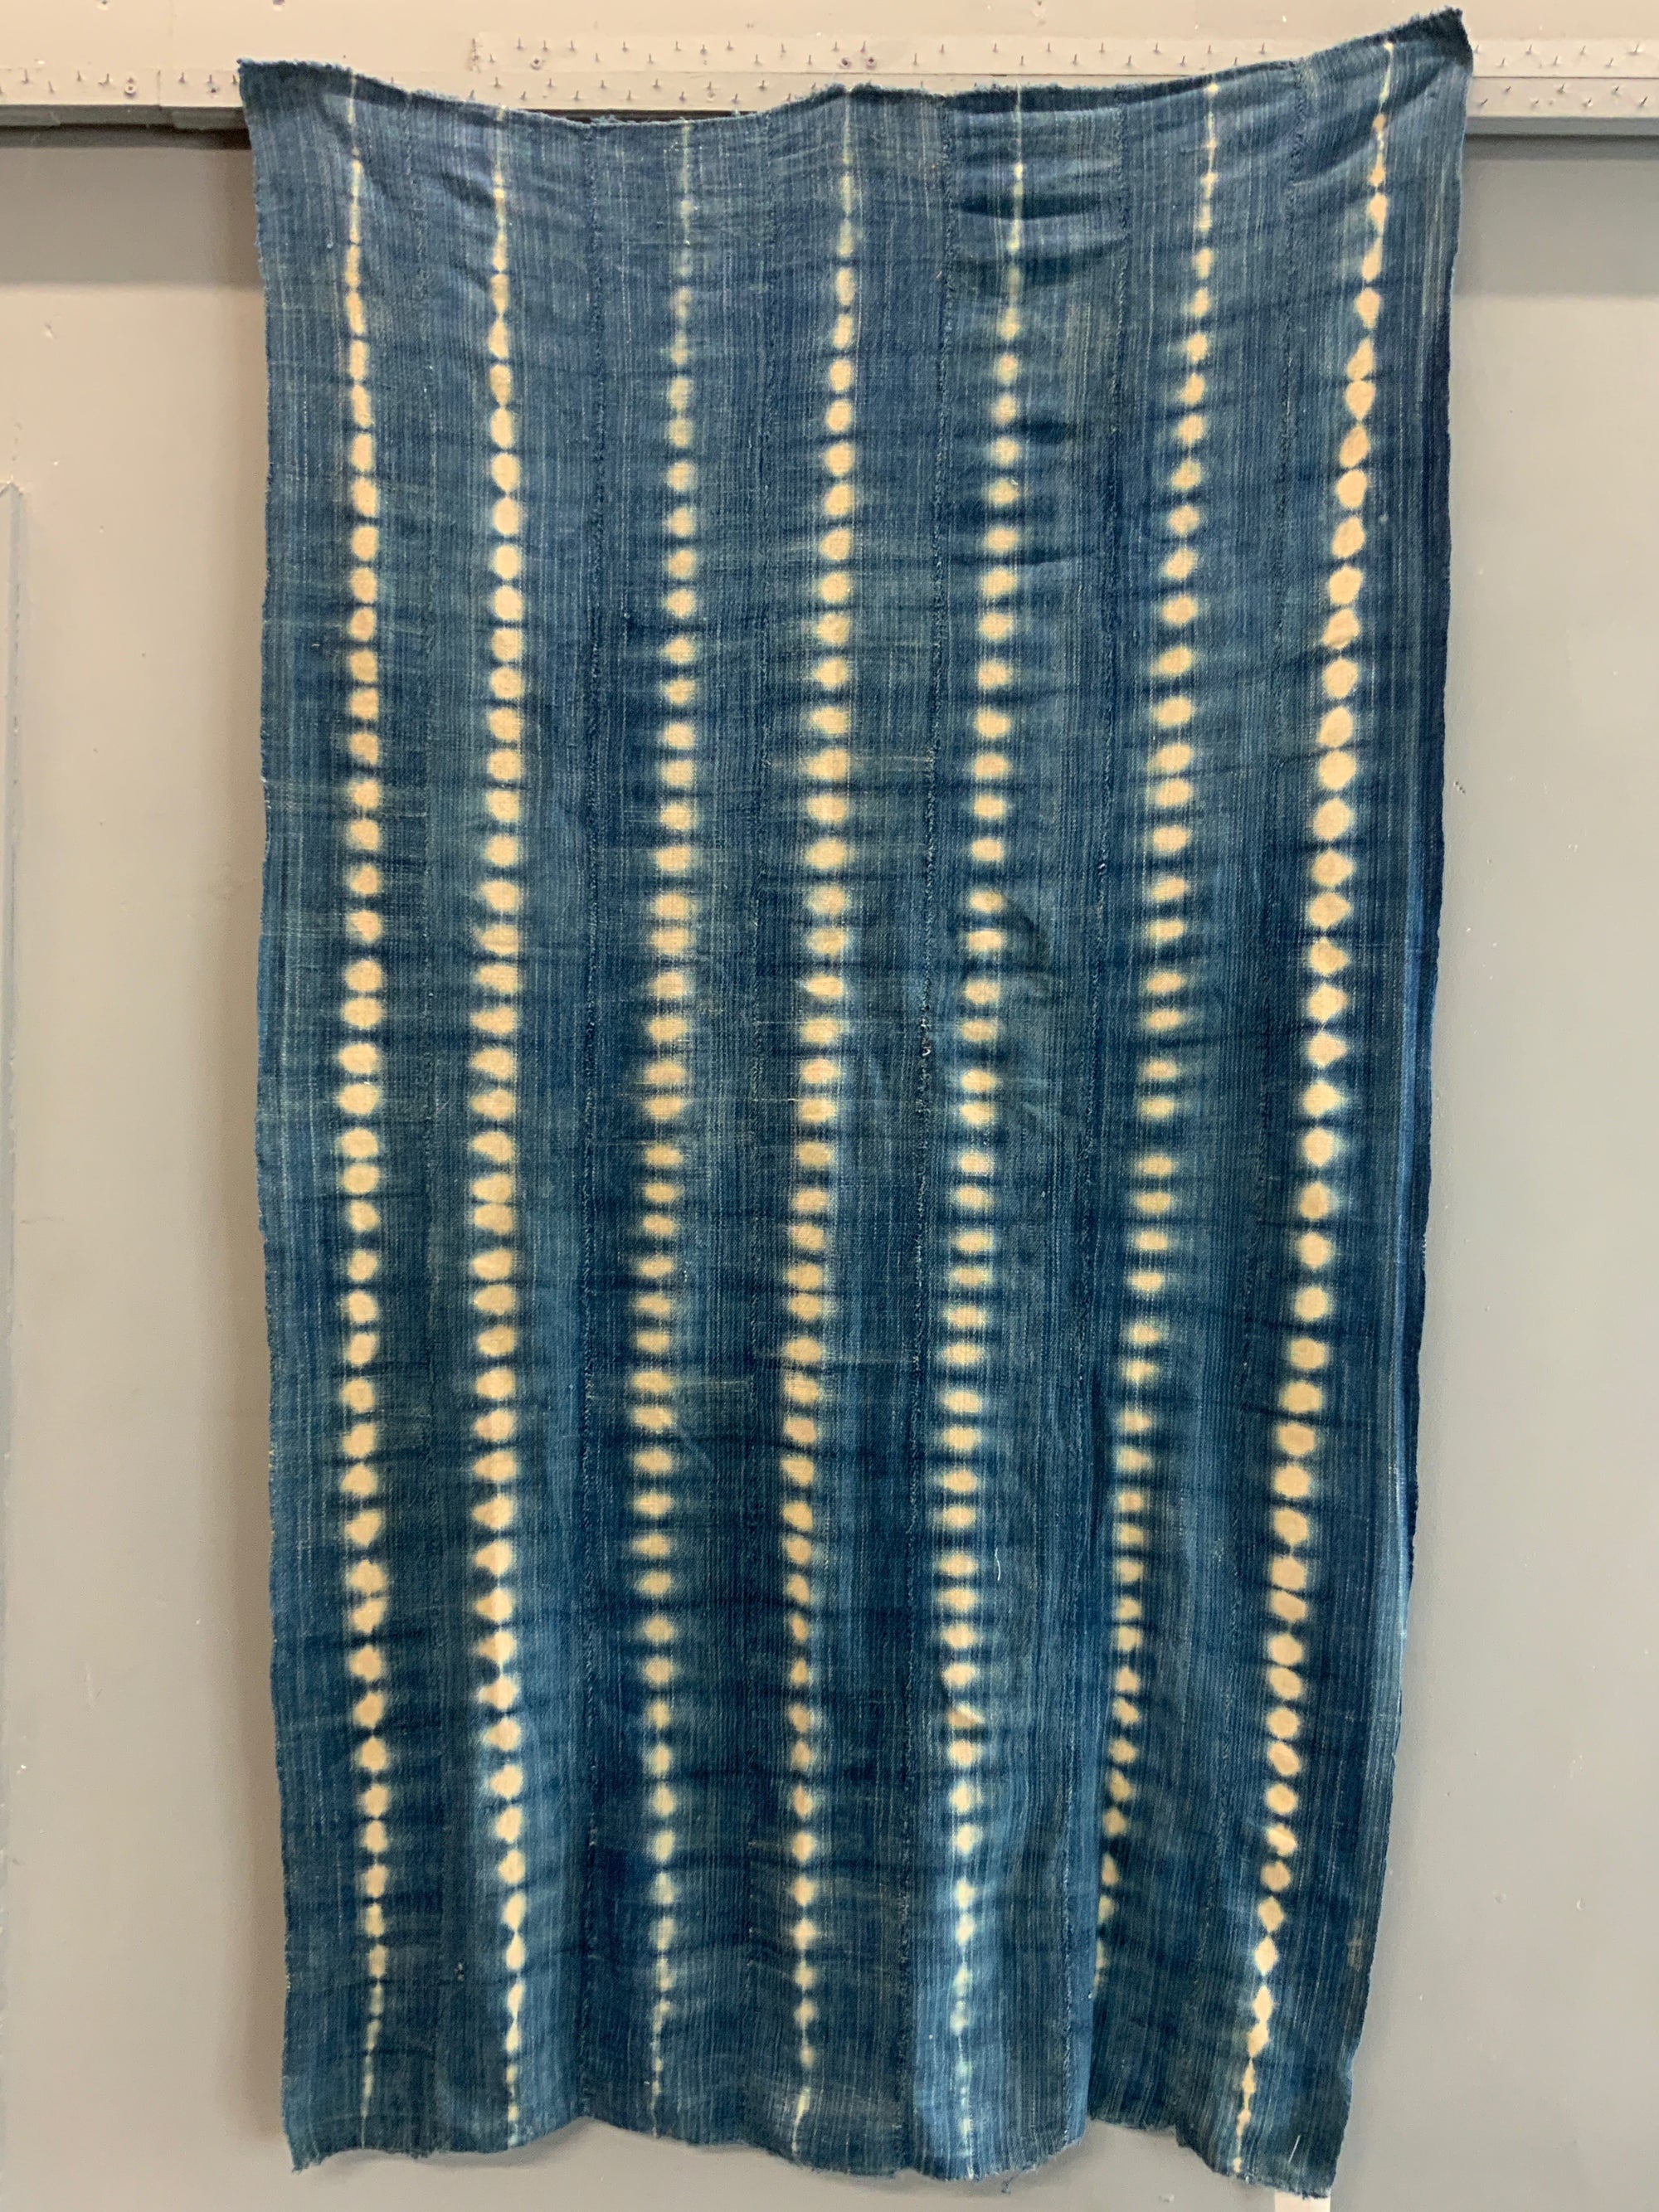 West African Burkina Faso vintage indigo resist cloth (160 x 90cm)